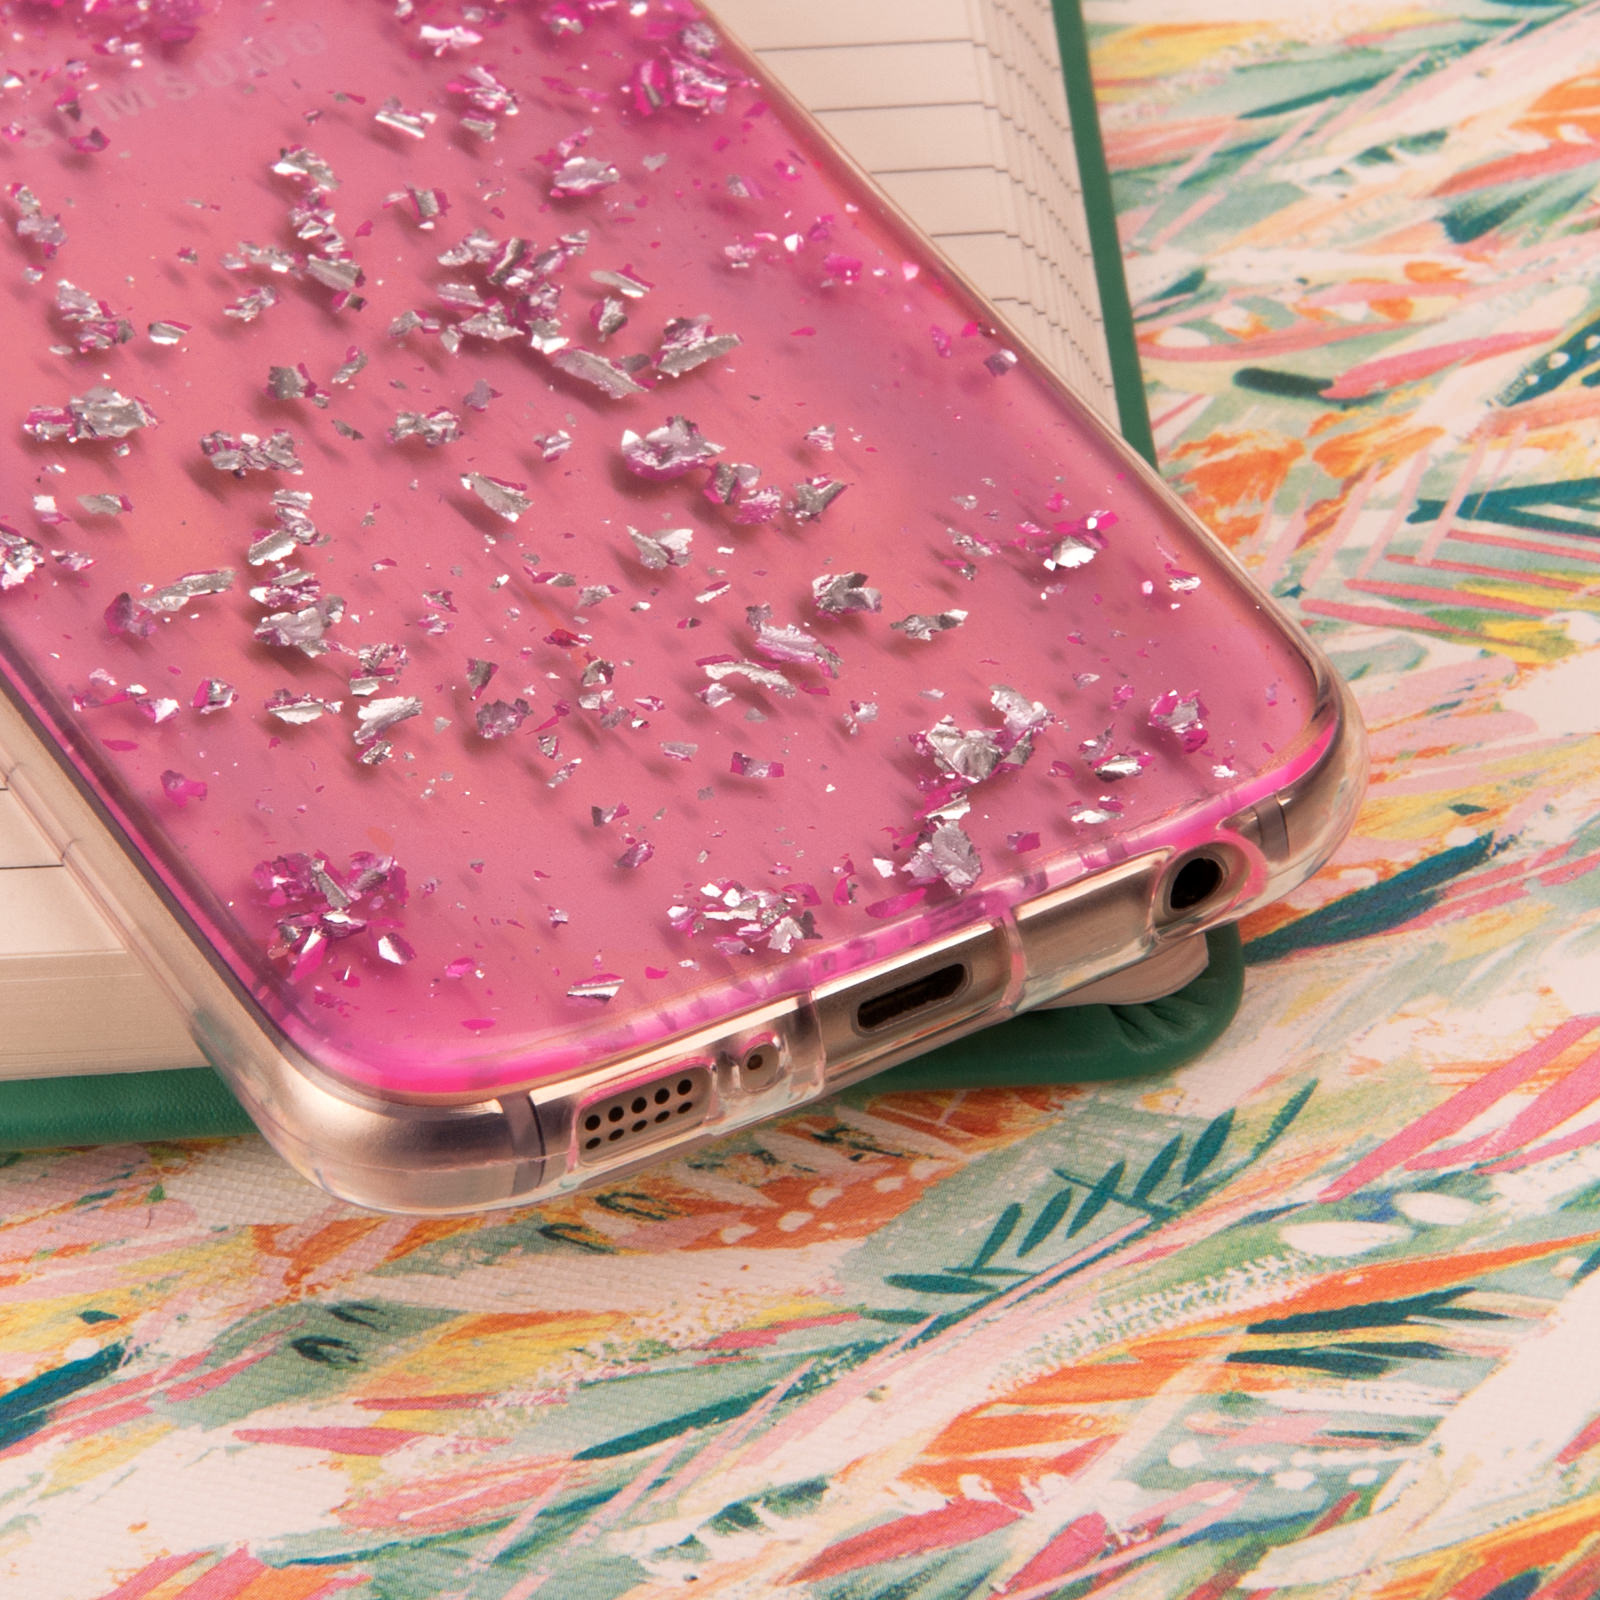 Caseflex Samsung Galaxy S6 Tinfoil Soft Case - Pink